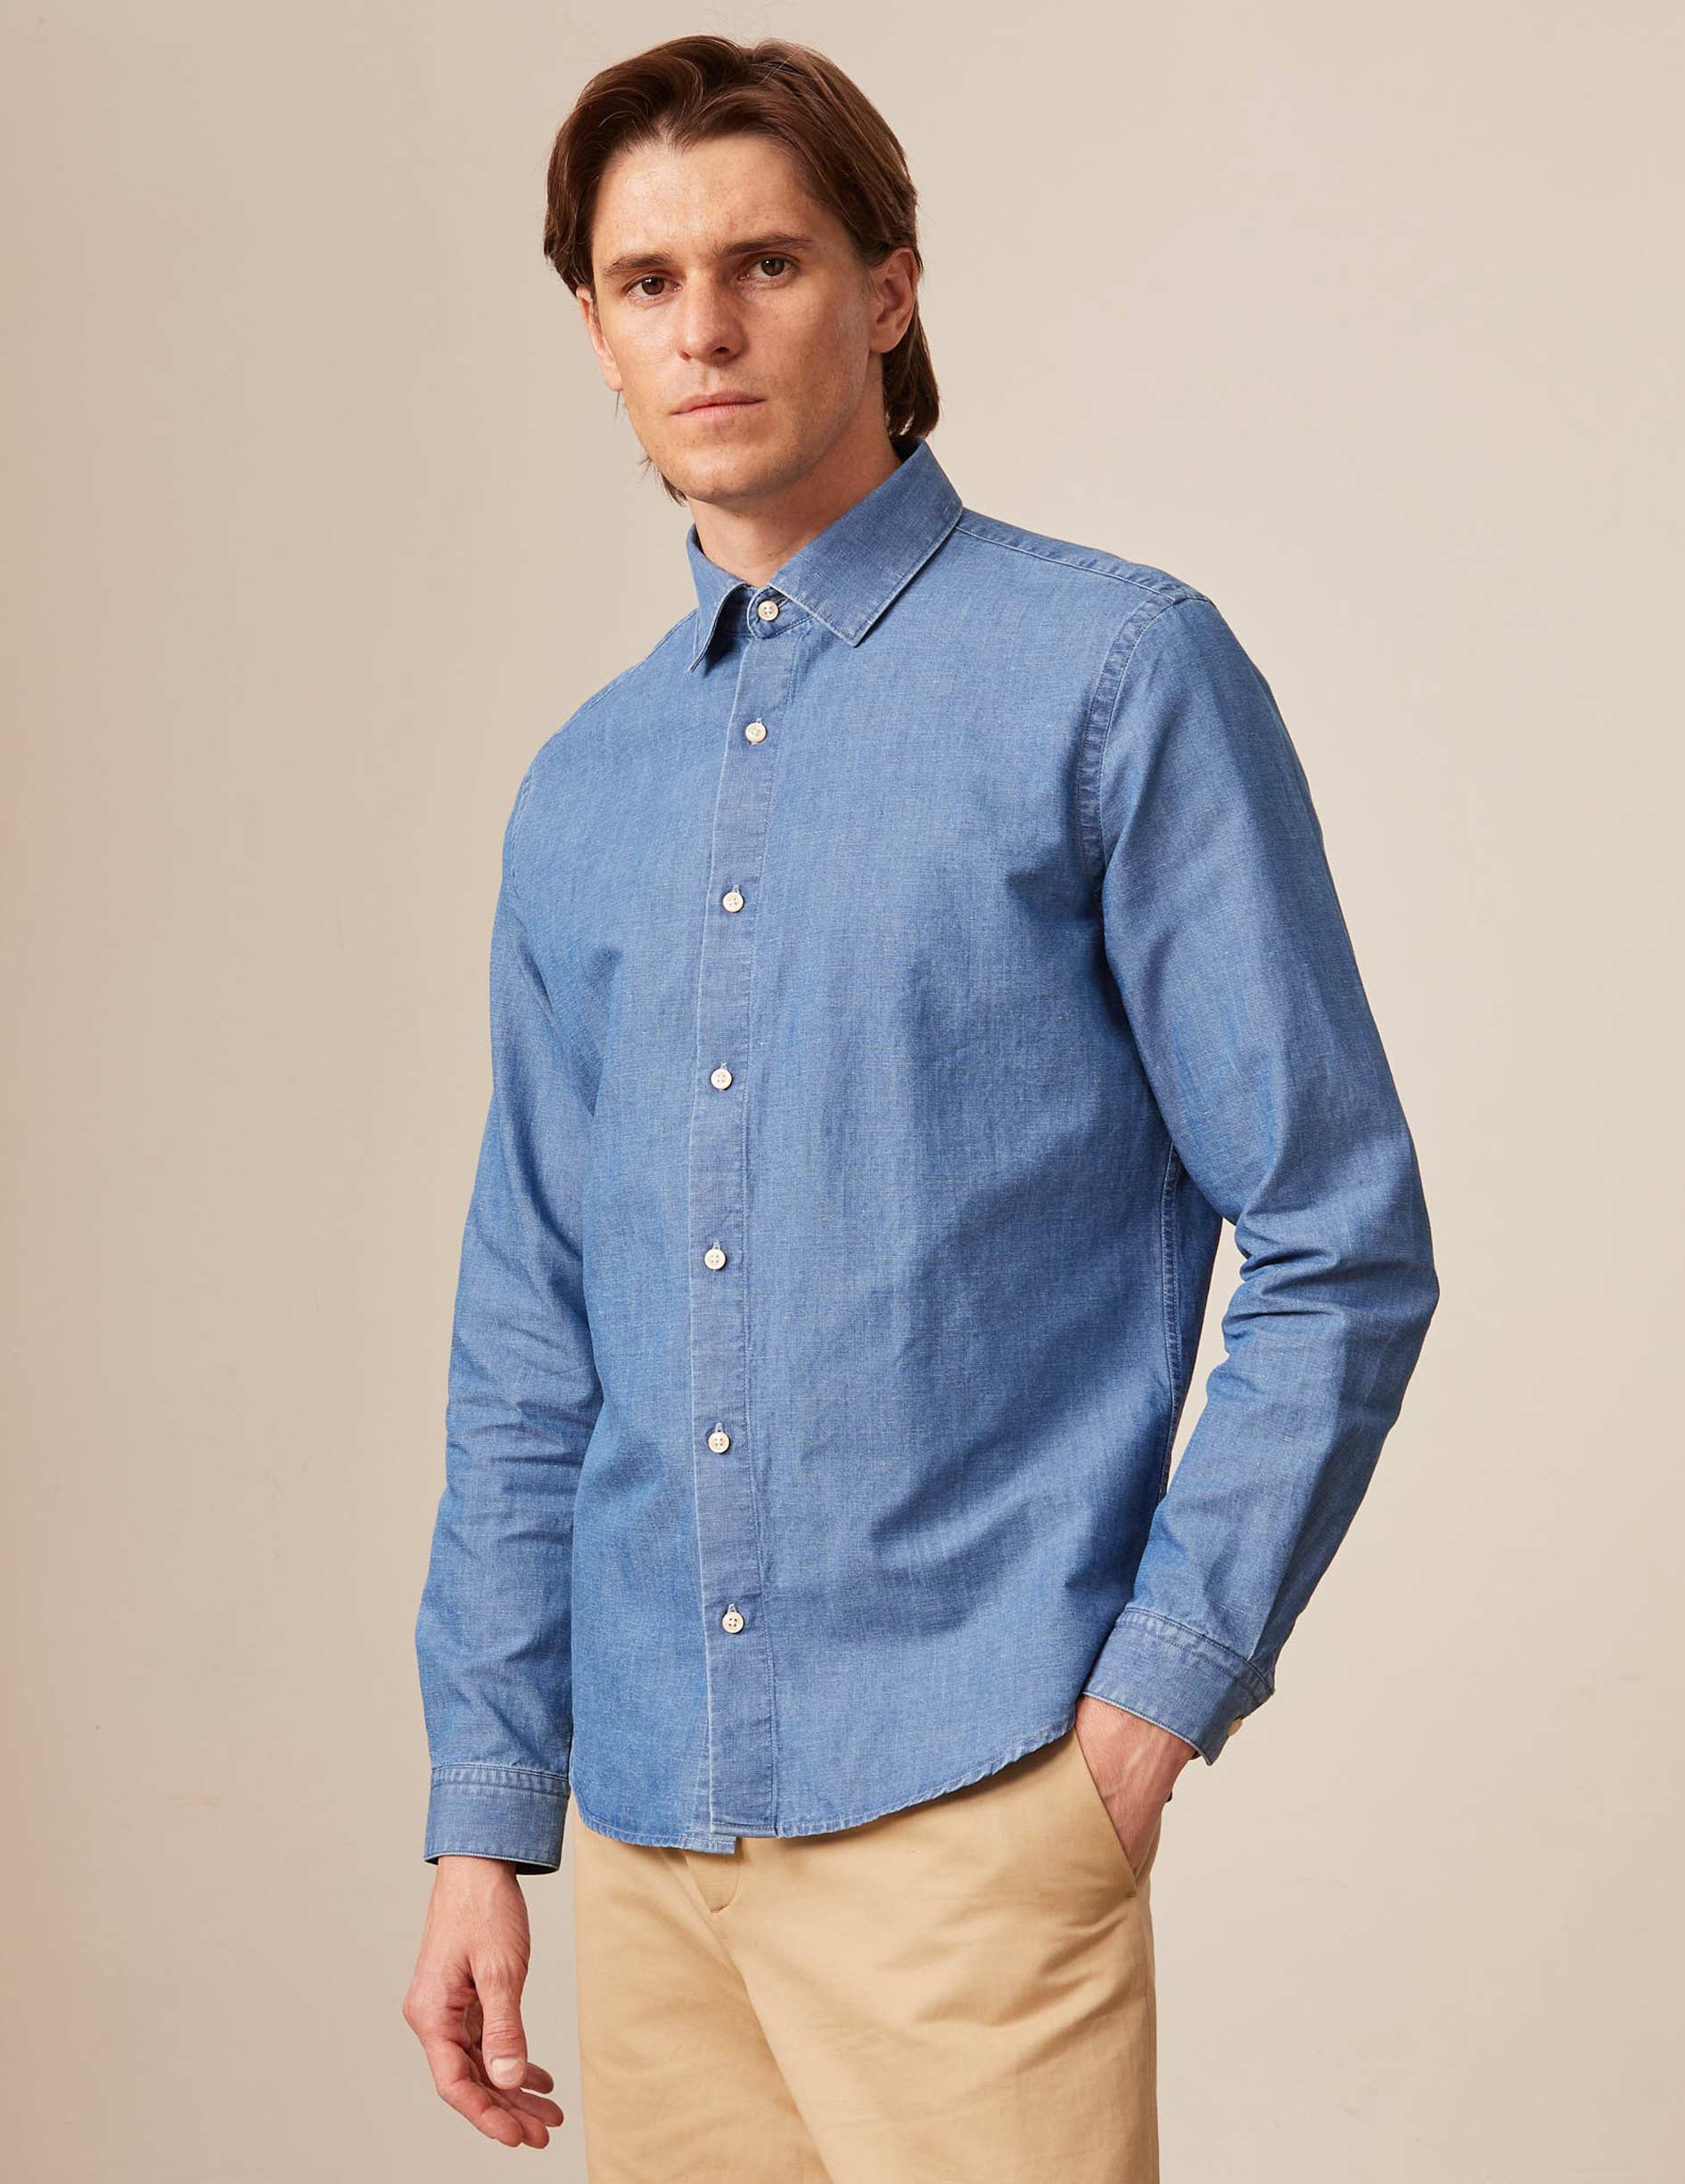 Leonard shirt in blue denim - Chambray - French Collar